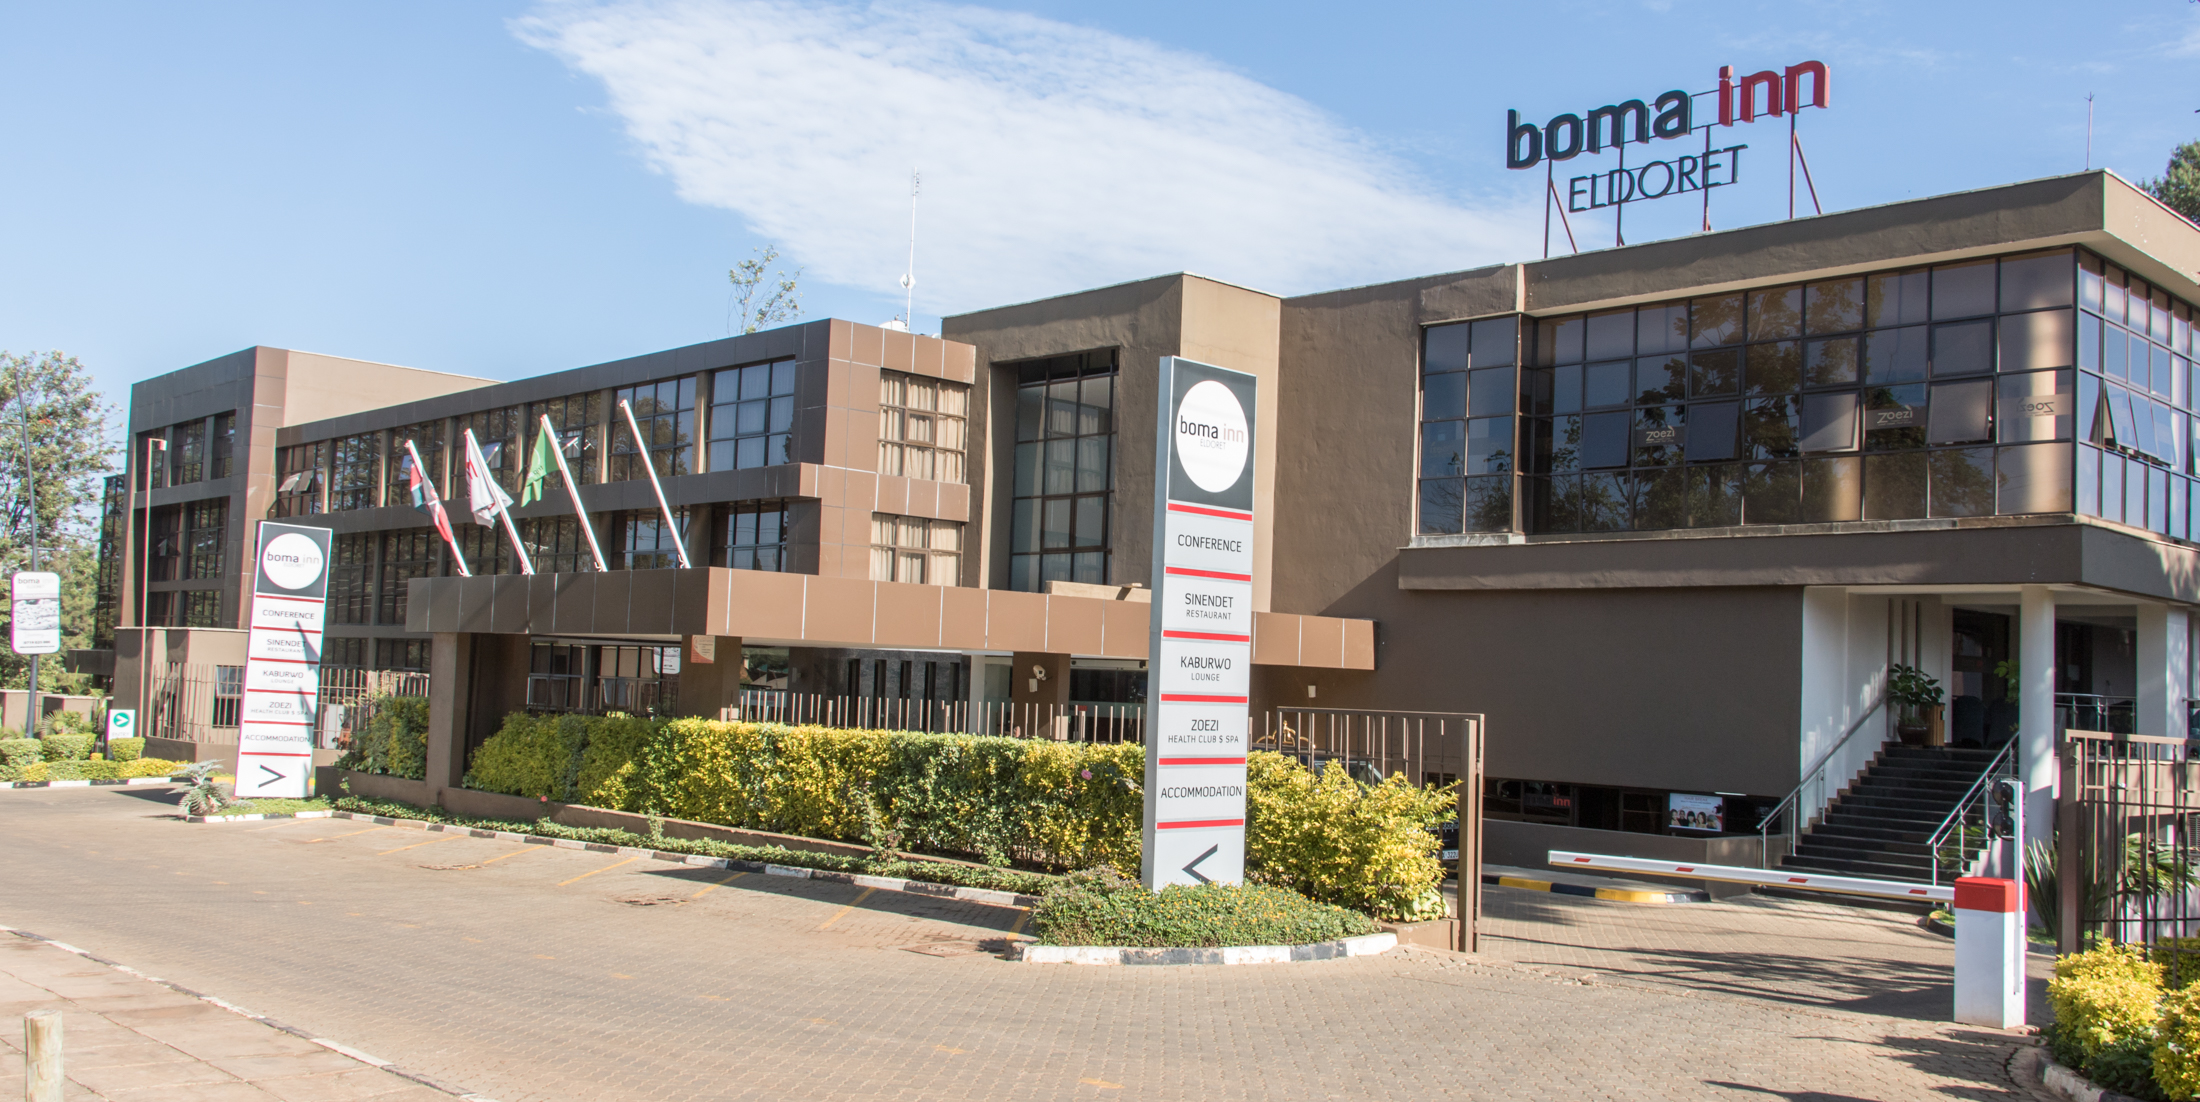 Boma Inn Eldoret image